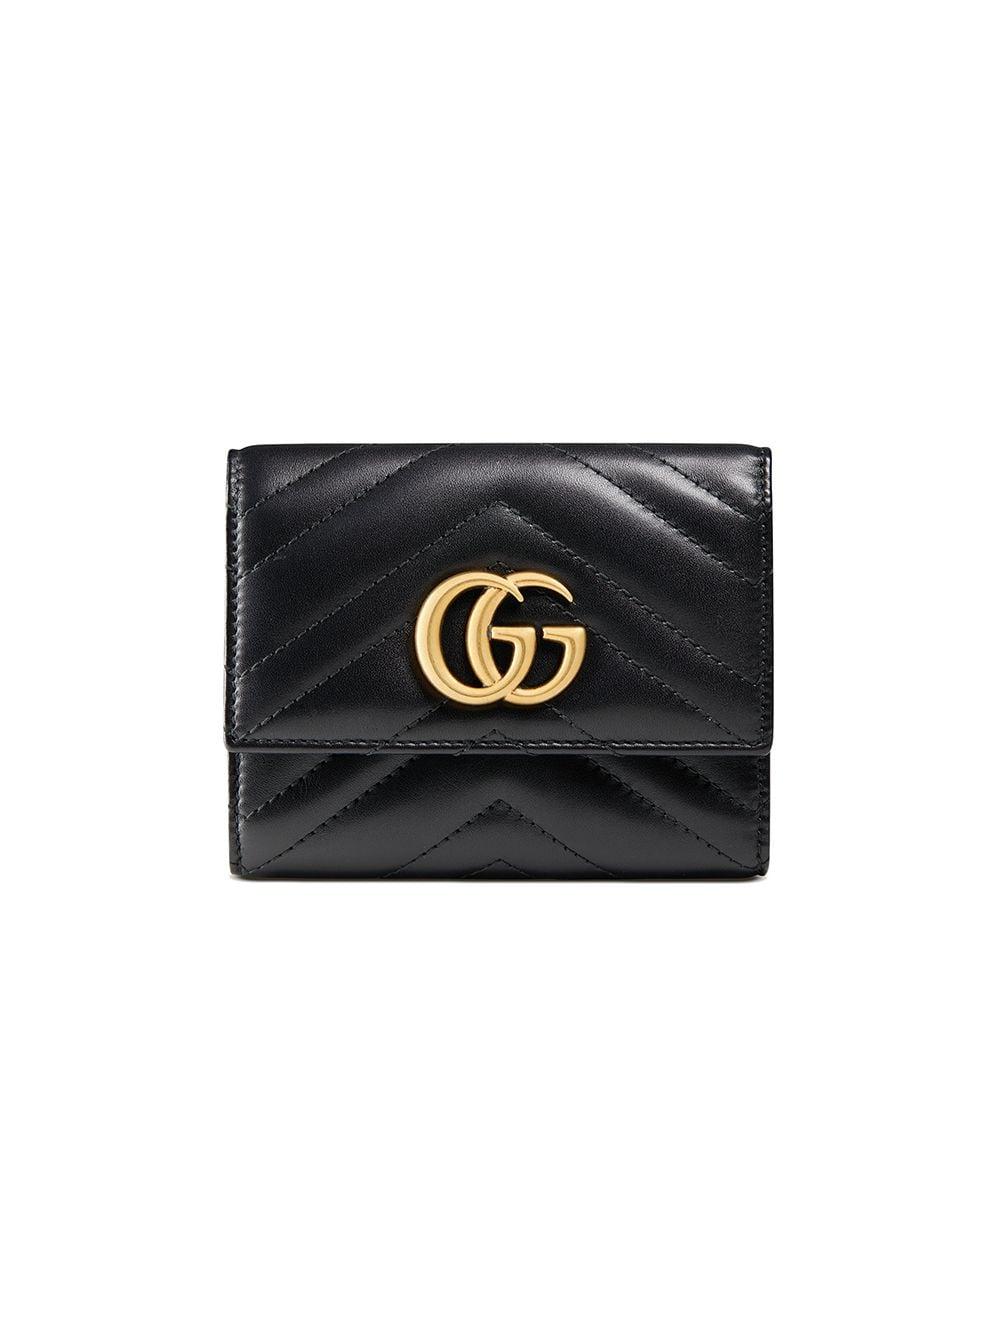 Gucci GG Marmont Matelassé Wallet in Black | Lyst